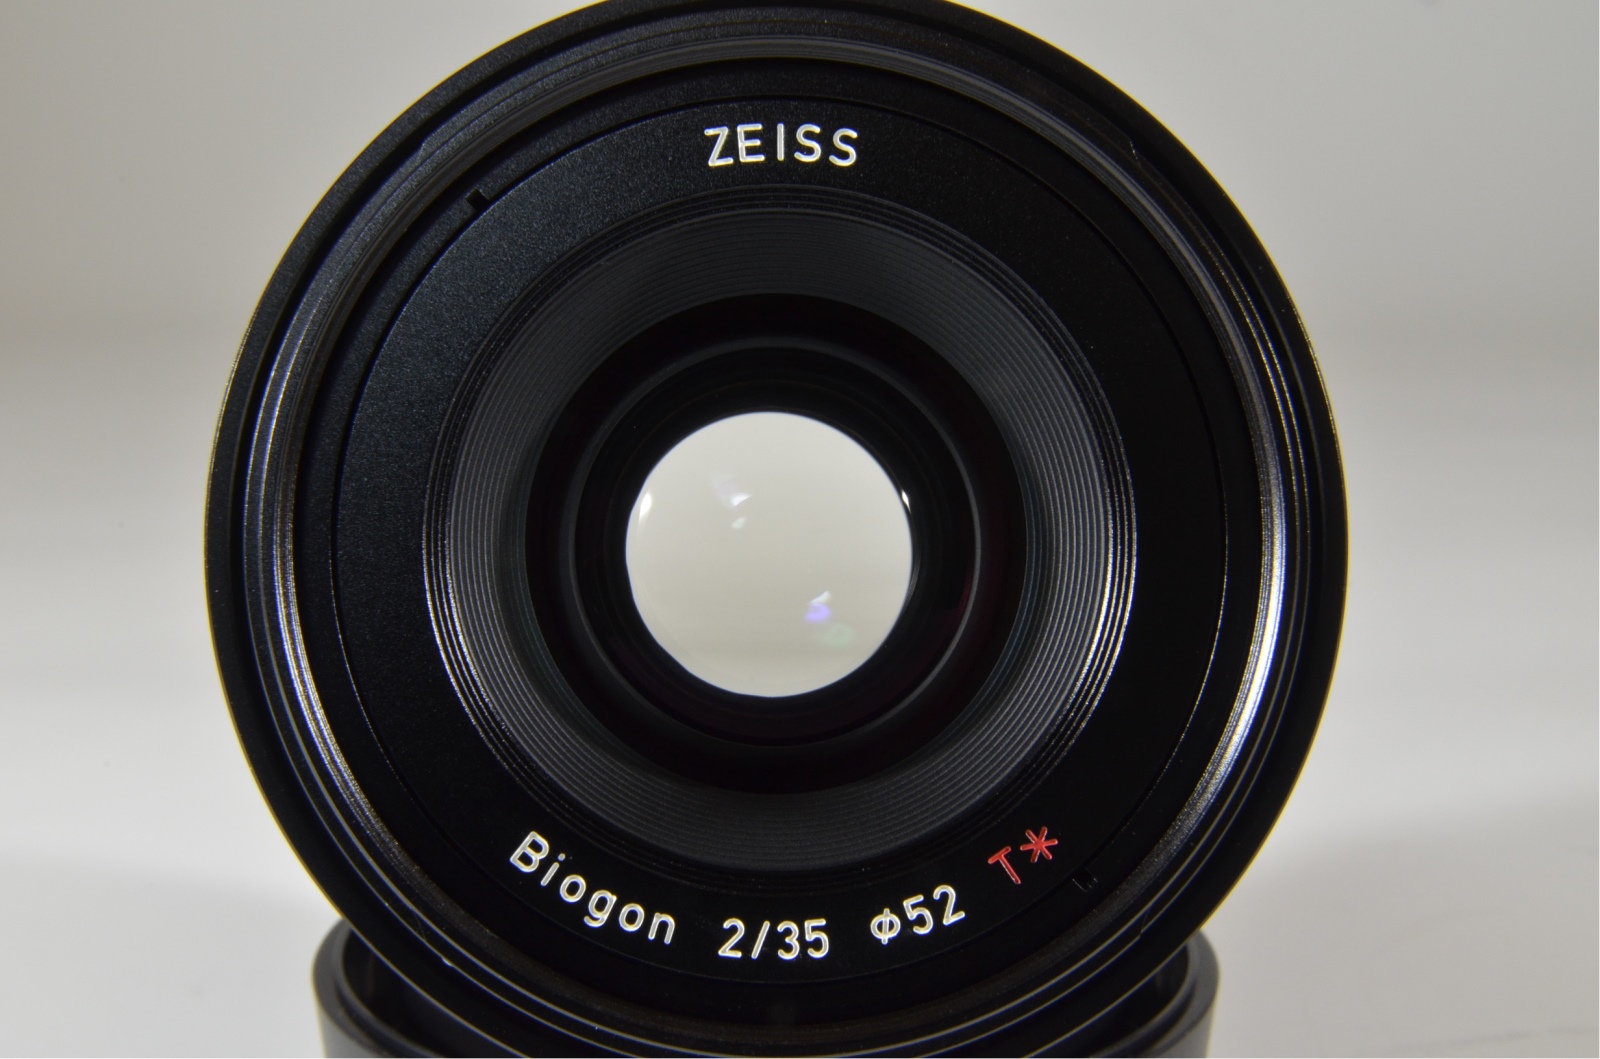 carl zeiss loxia 35mm f/2 biogon t* lens for sony e mount